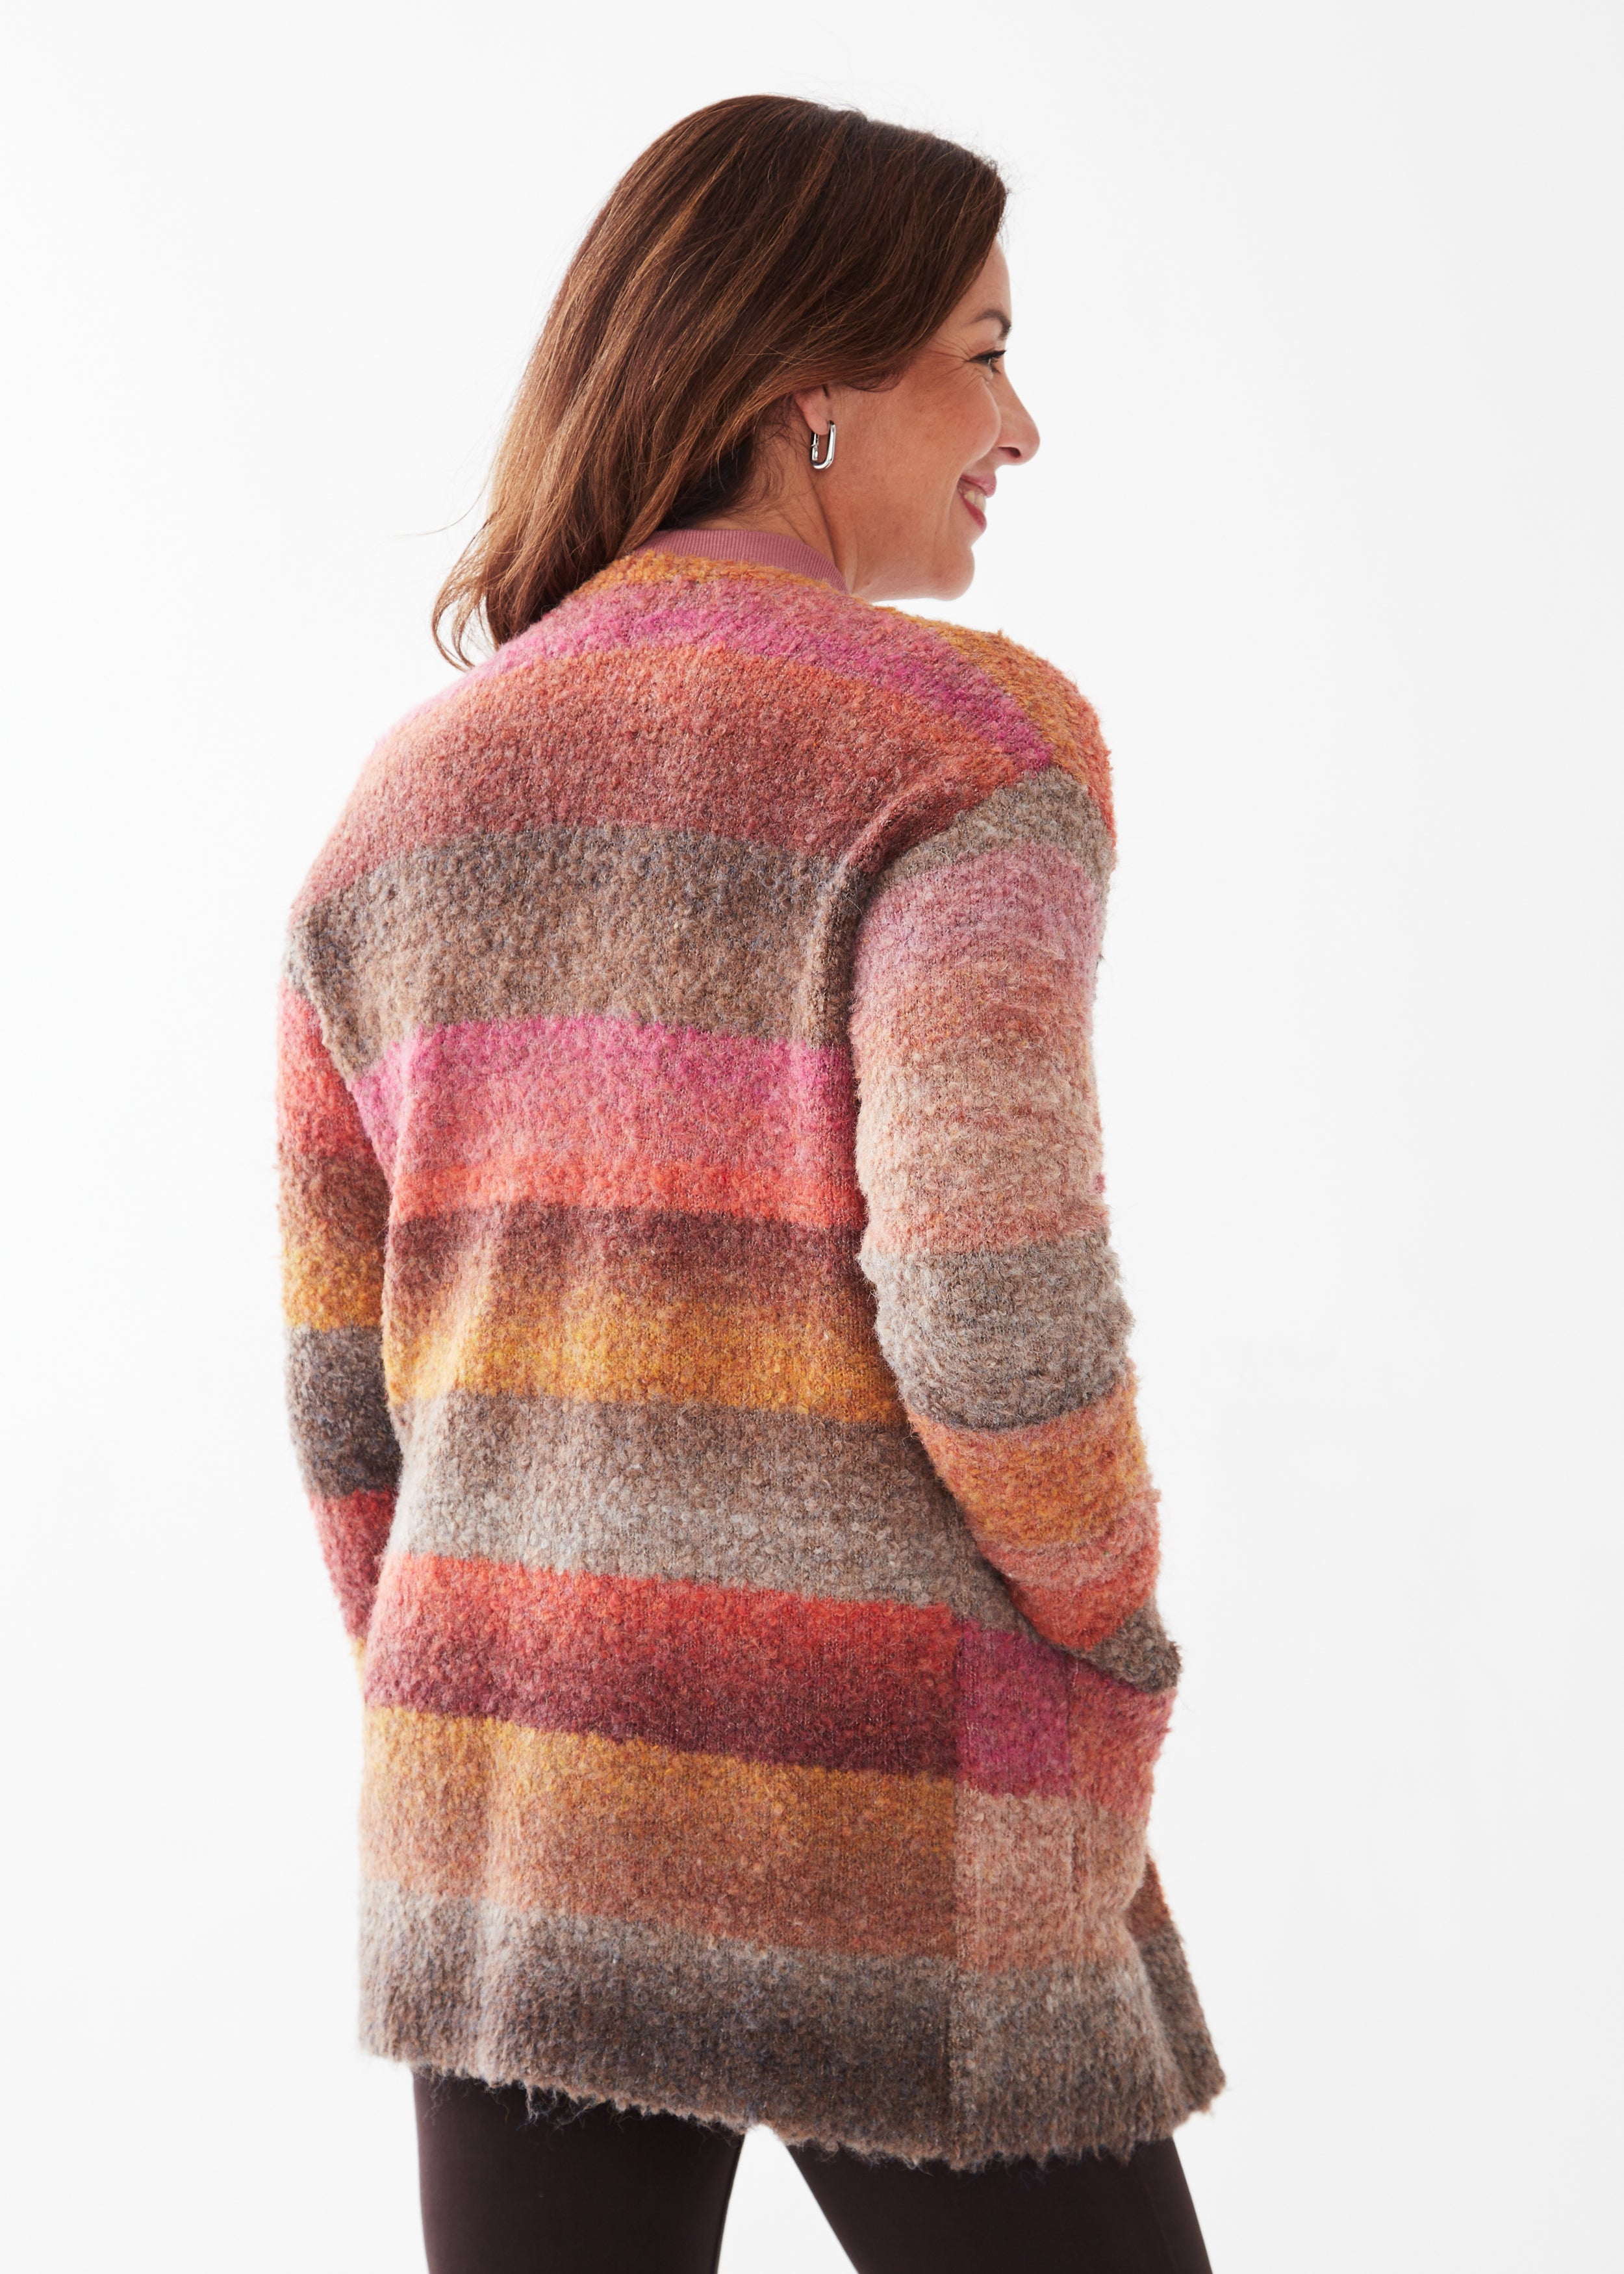 Boucle Space Dye Long Cardigan Sweater by FDJ